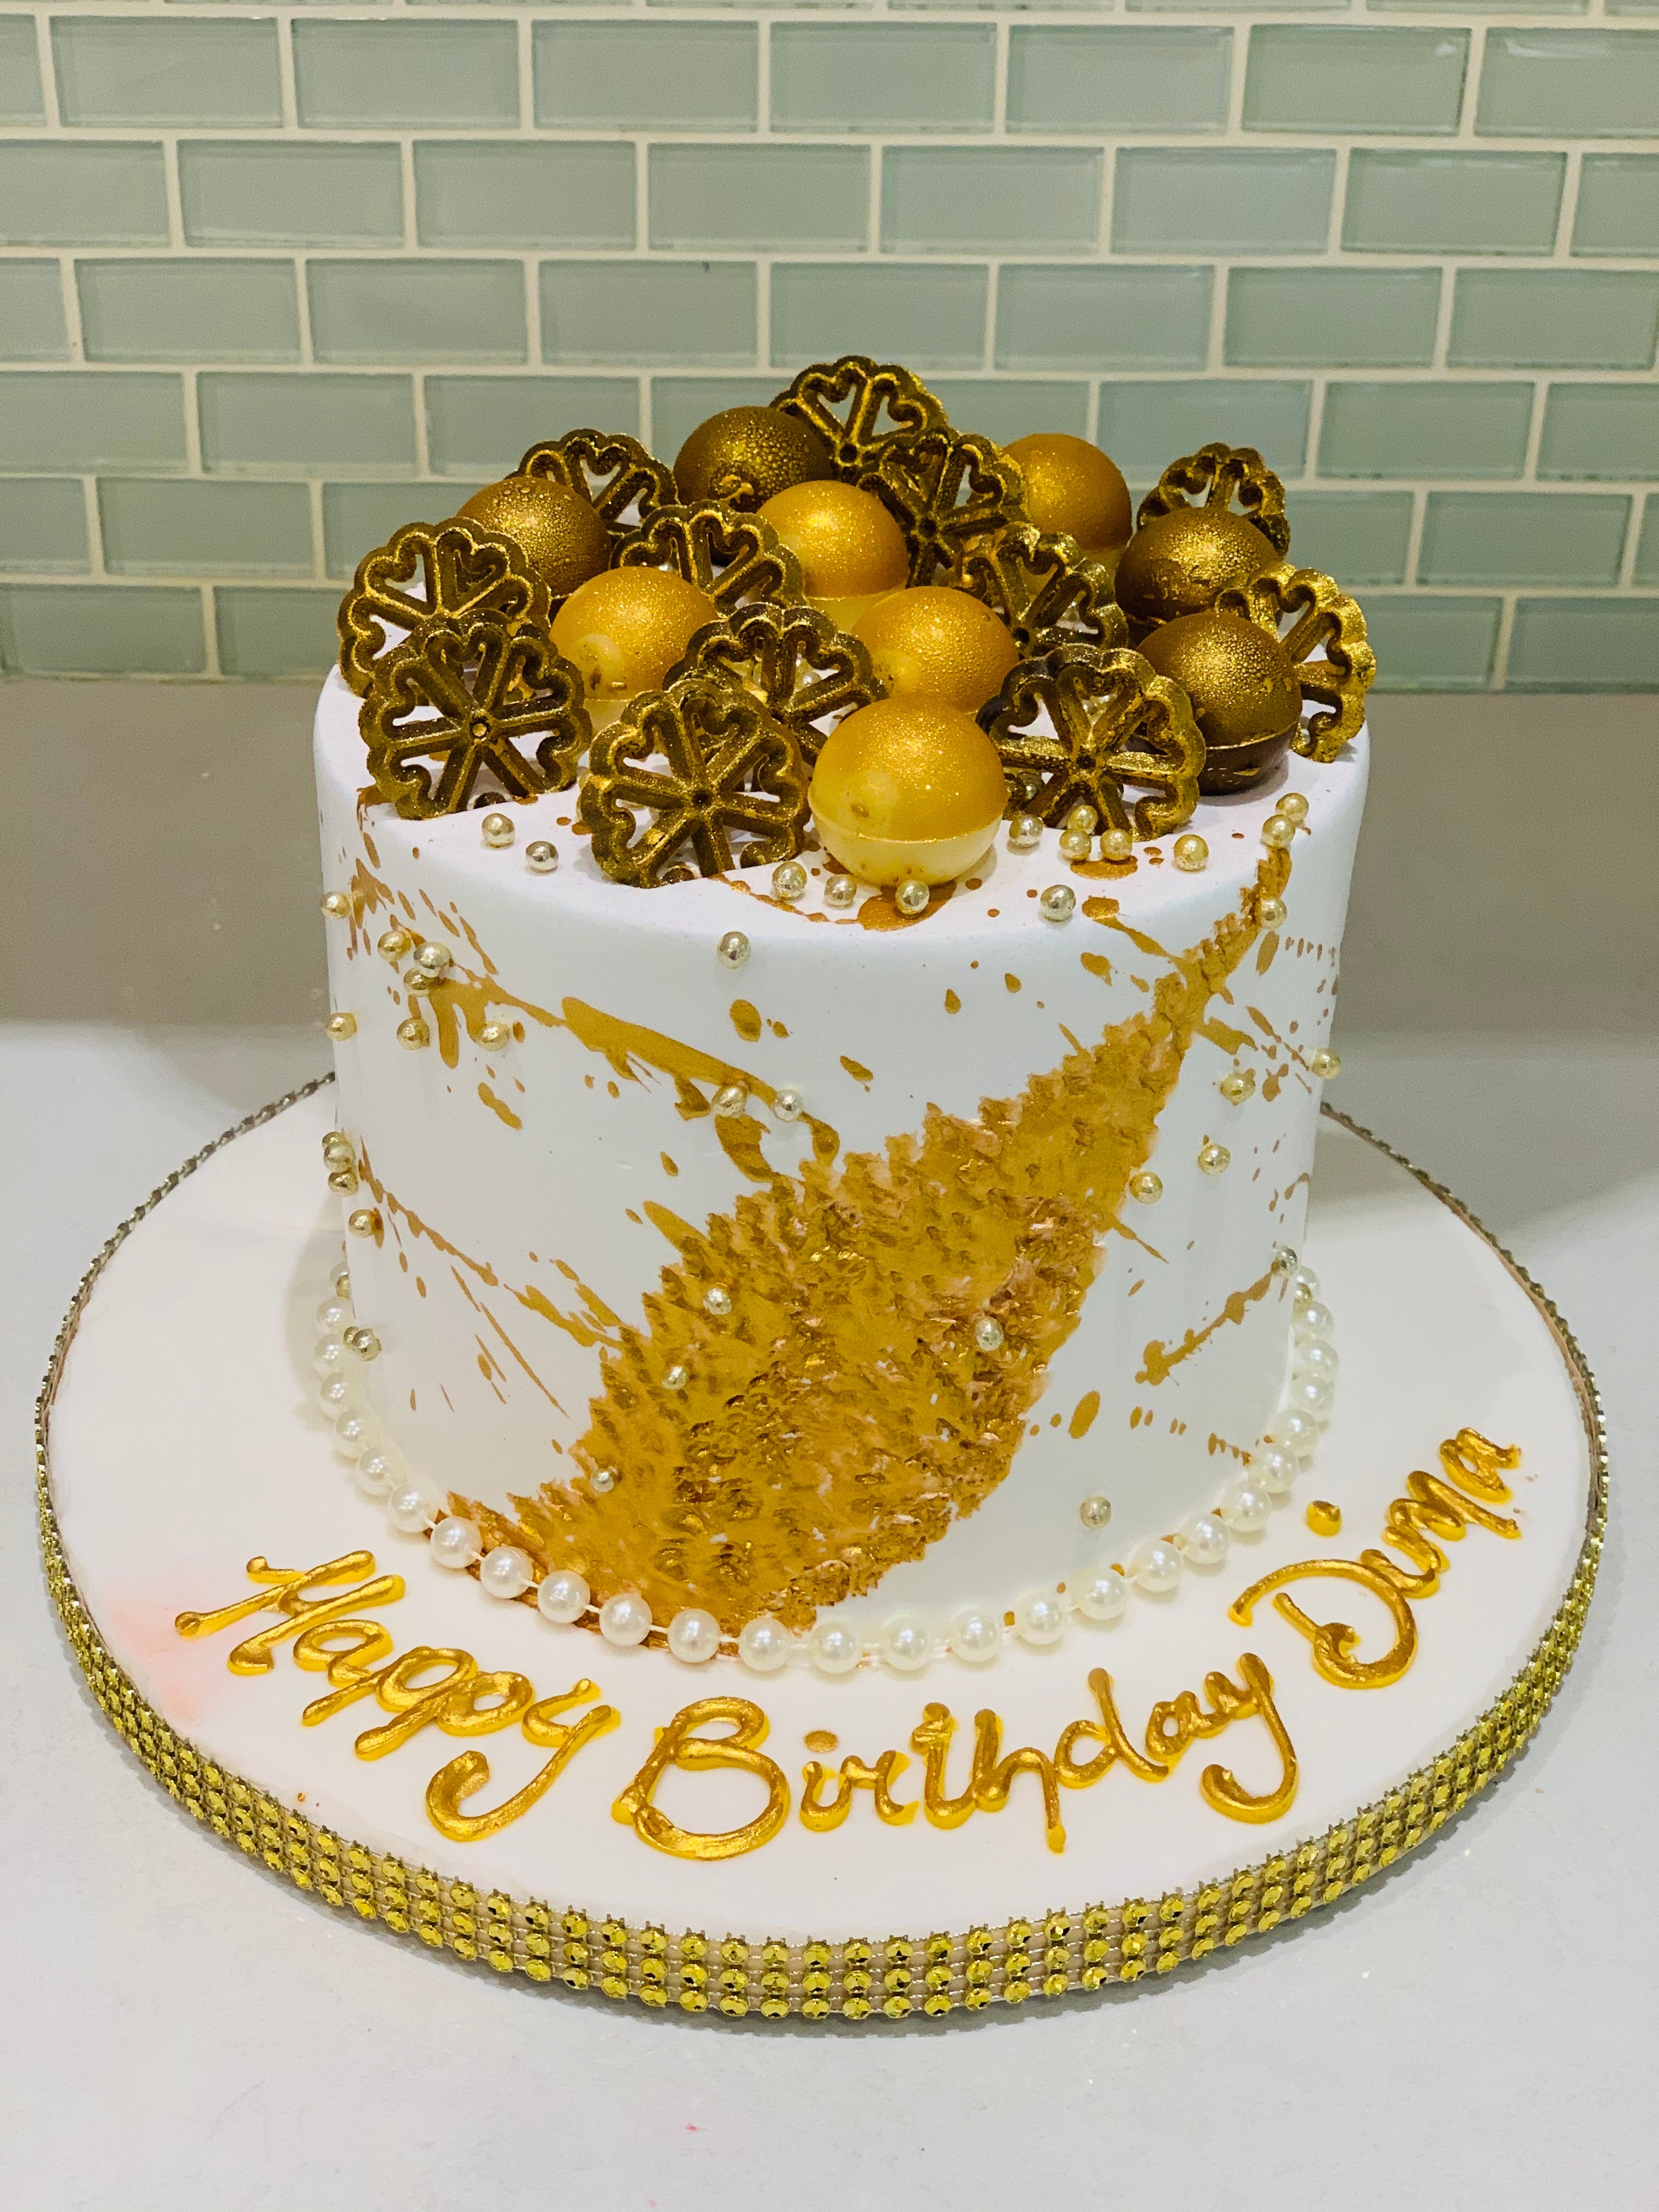 Ron Ben-Israel Makes A 24-Karat Gold-Covered Black Wedding Cake